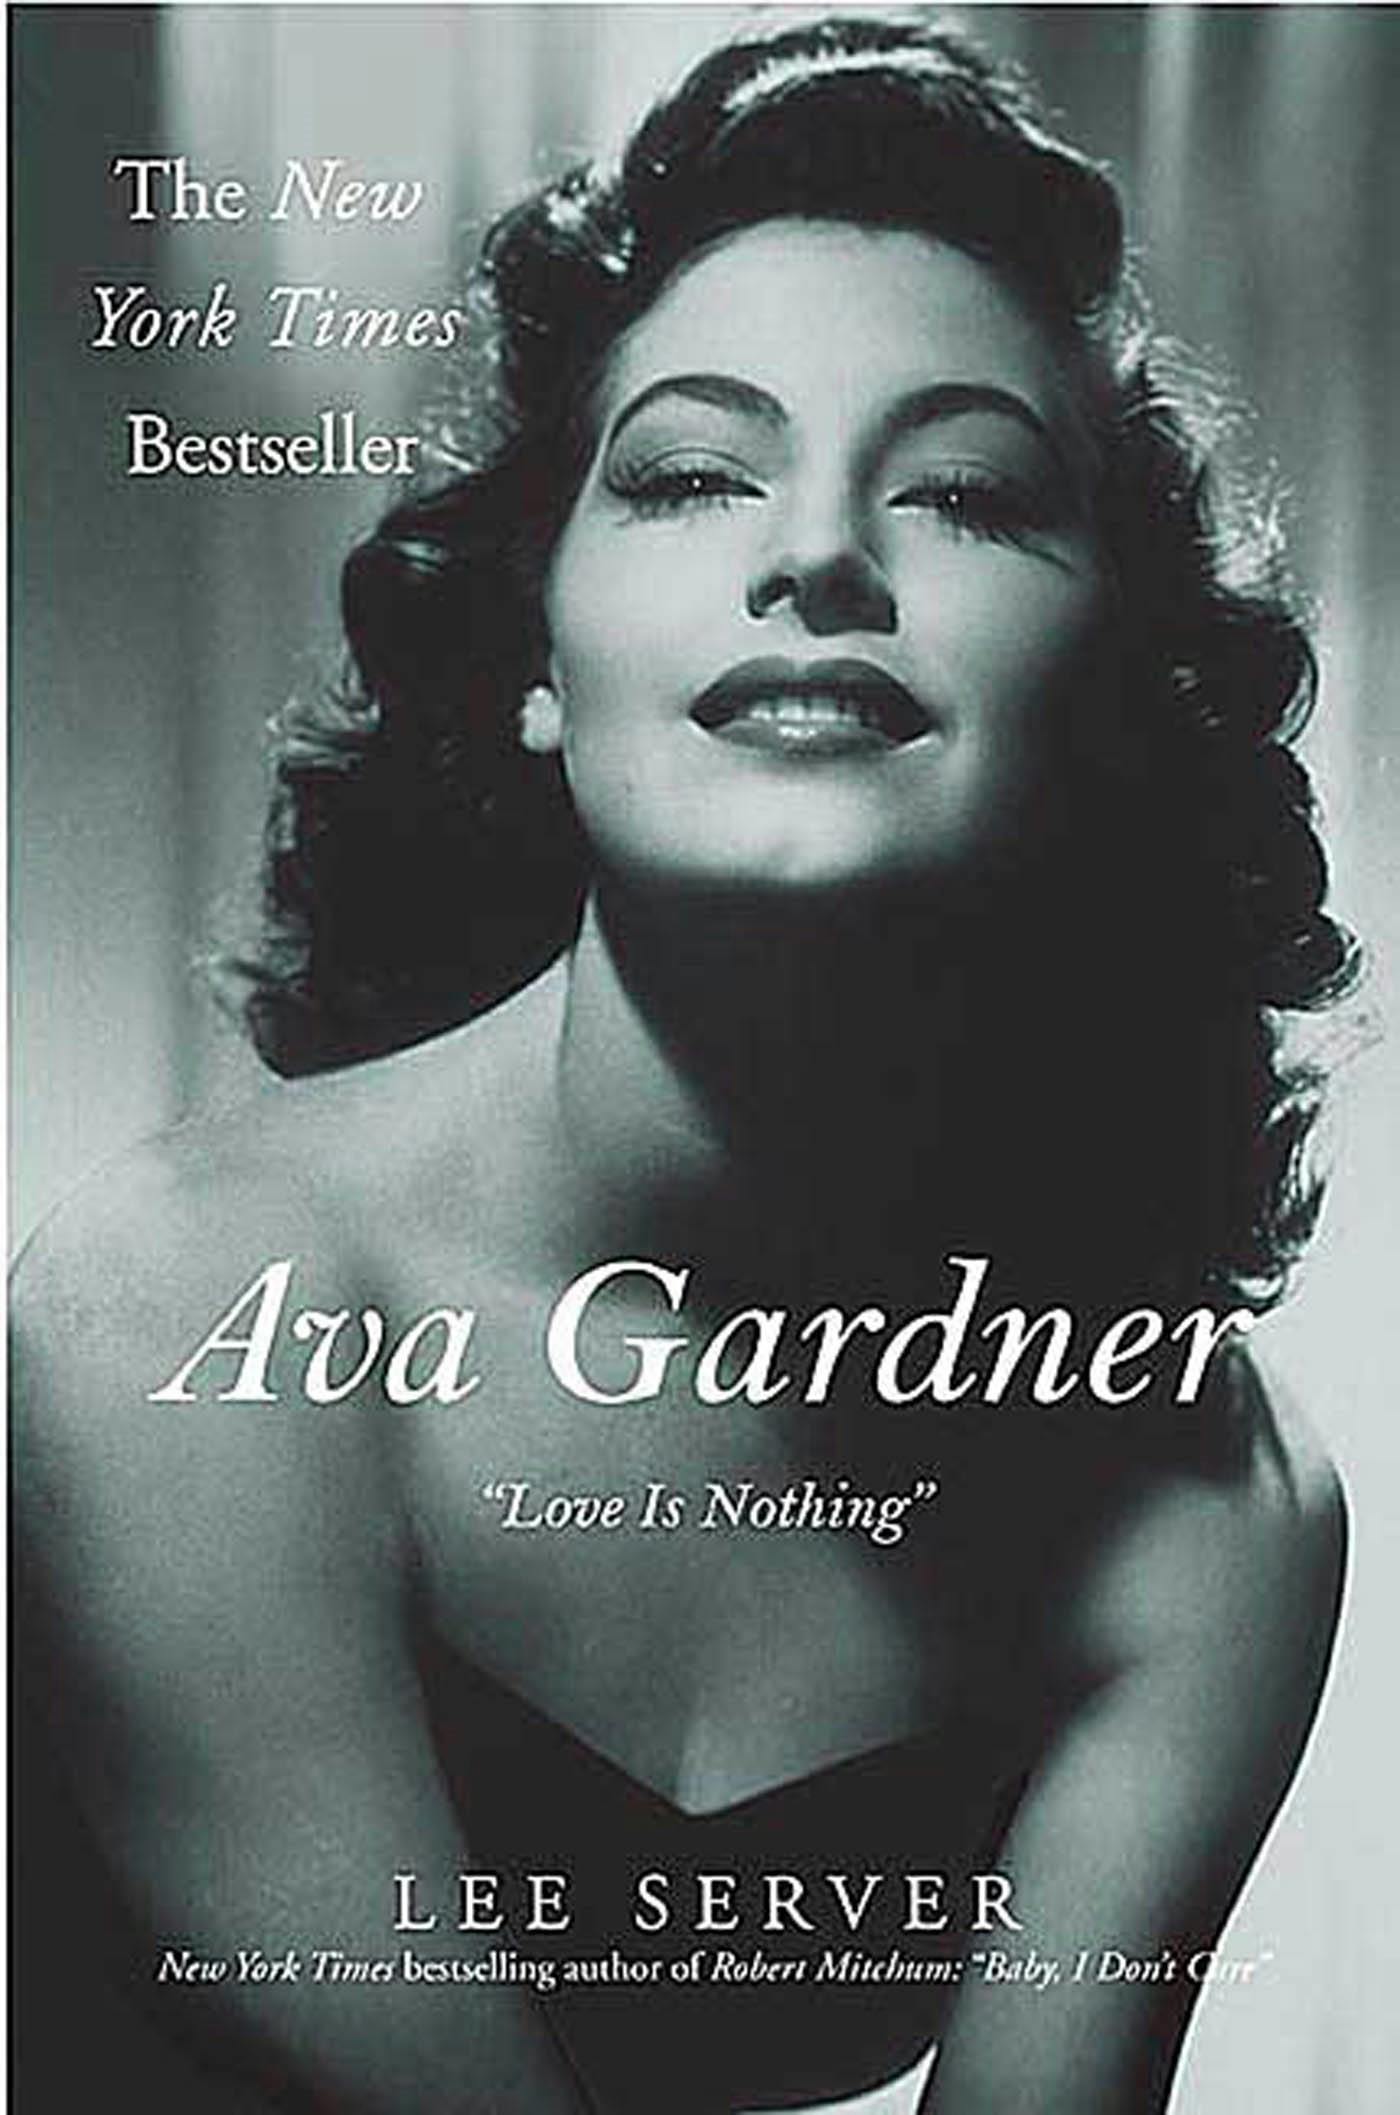 Ava Gardner photo